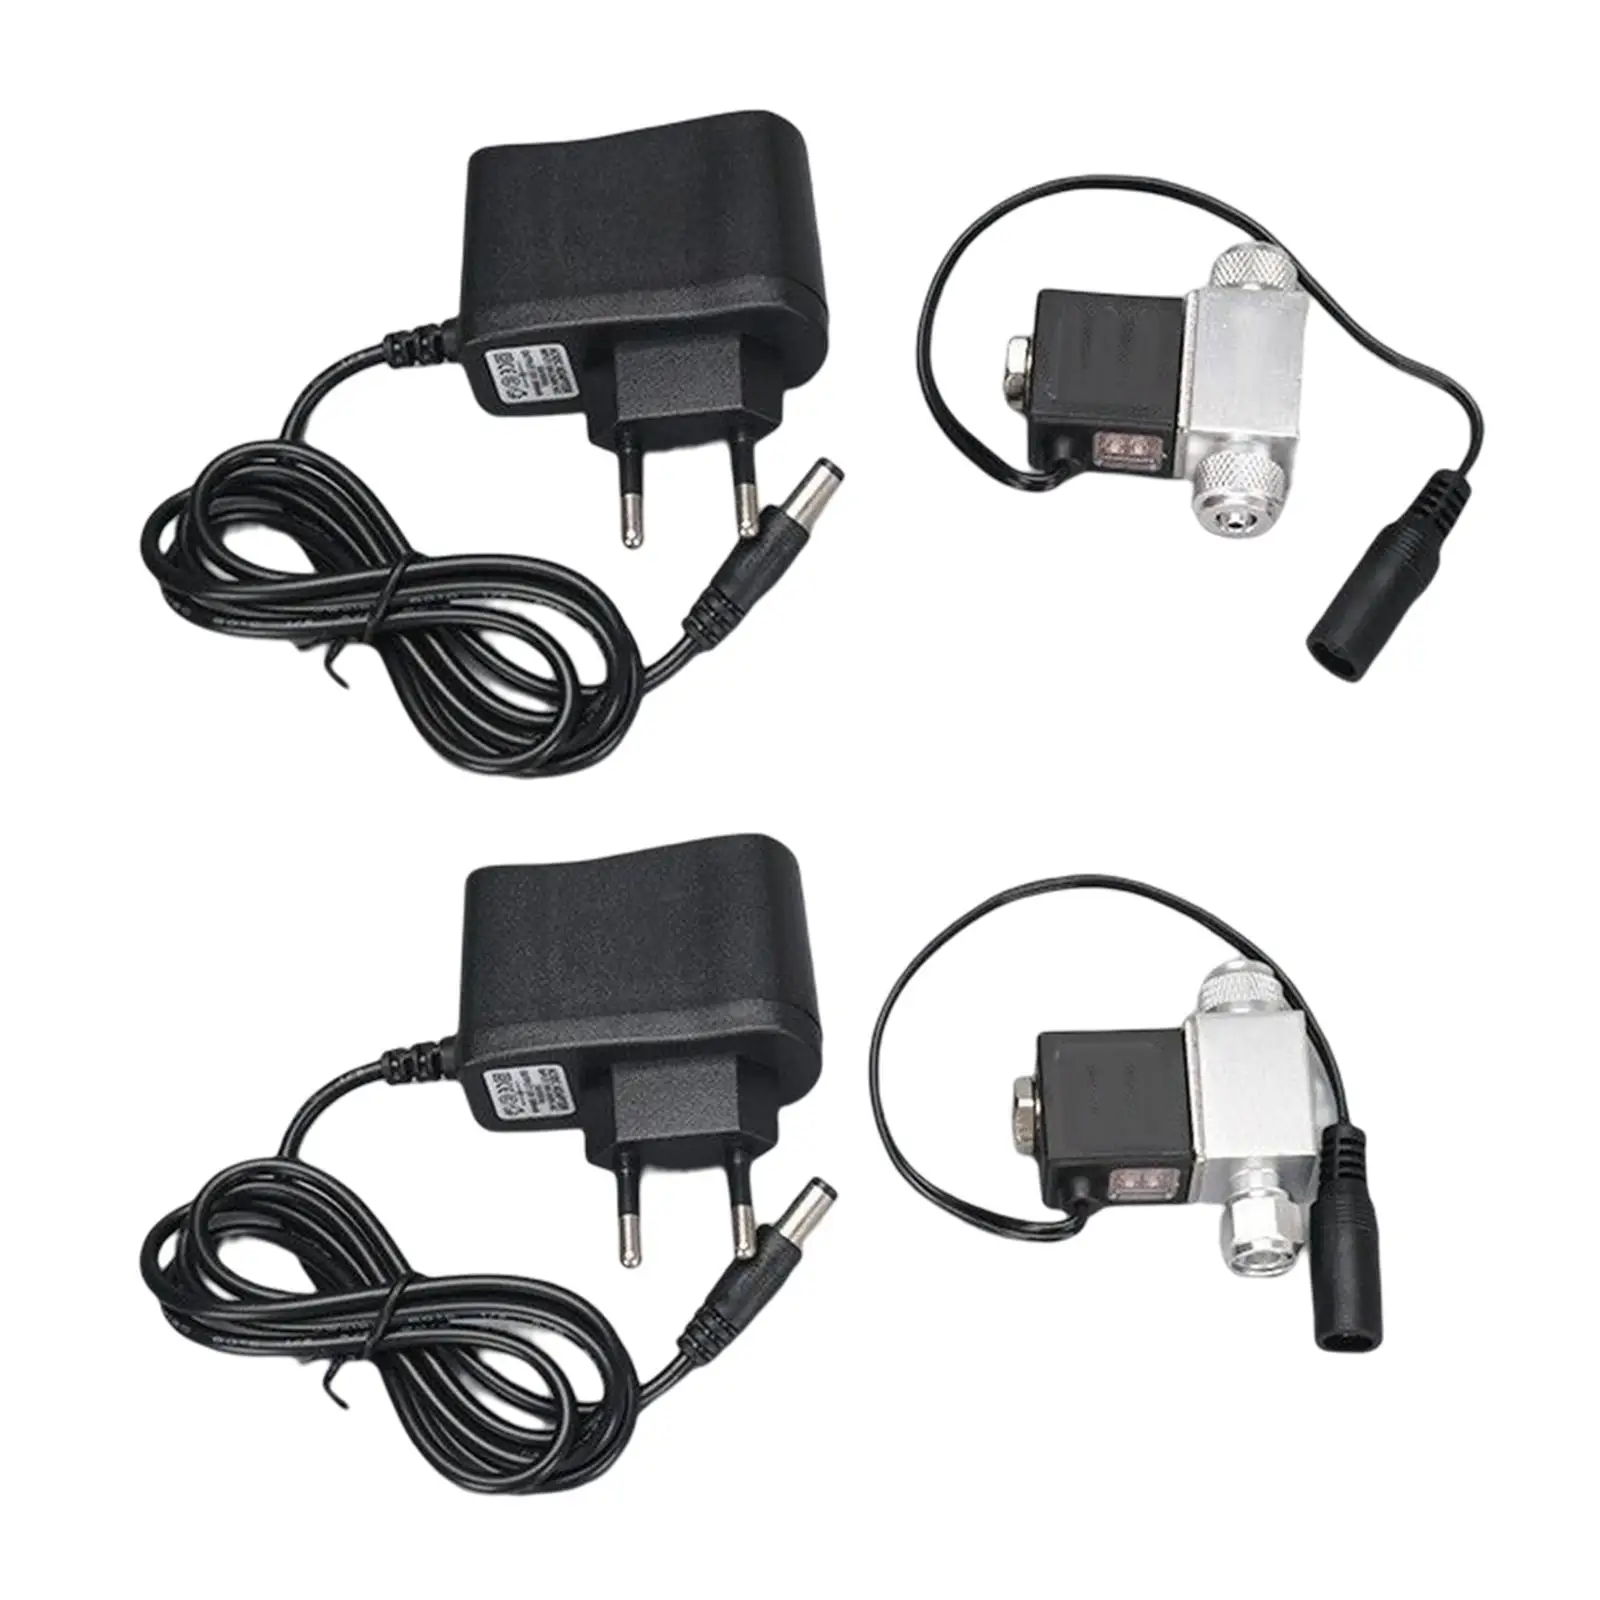 Electromagnetic Valve Fish Tank Accessories Electric Valve control devices Pressure Regulator CO2 Solenoid Valve Regulator